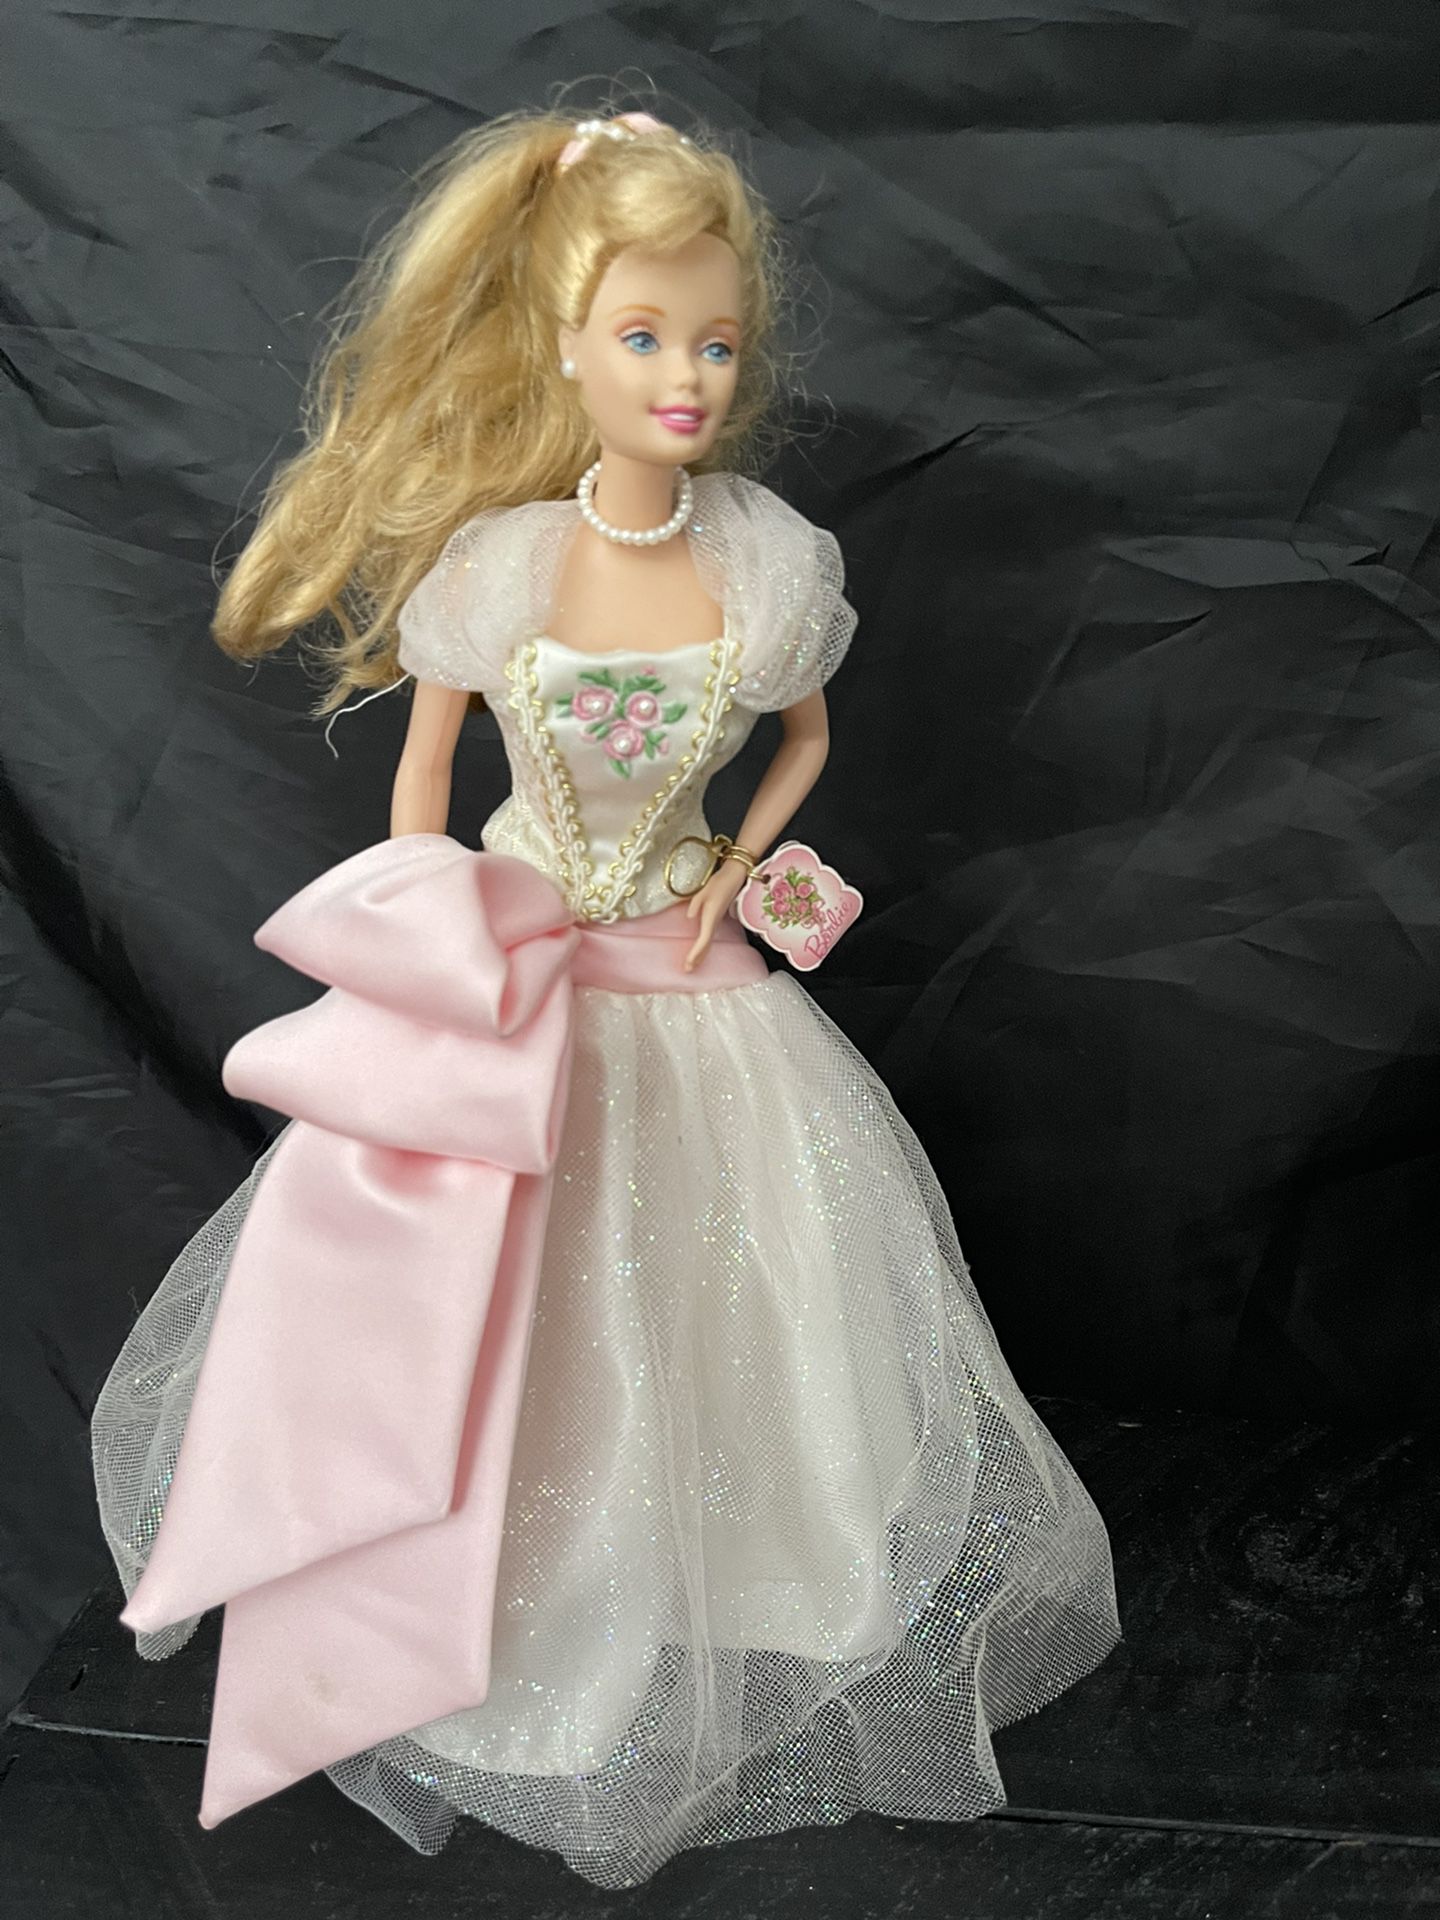 1998 Mattel Birthday Wishes Barbie Doll for Sale in Phoenix, AZ - OfferUp